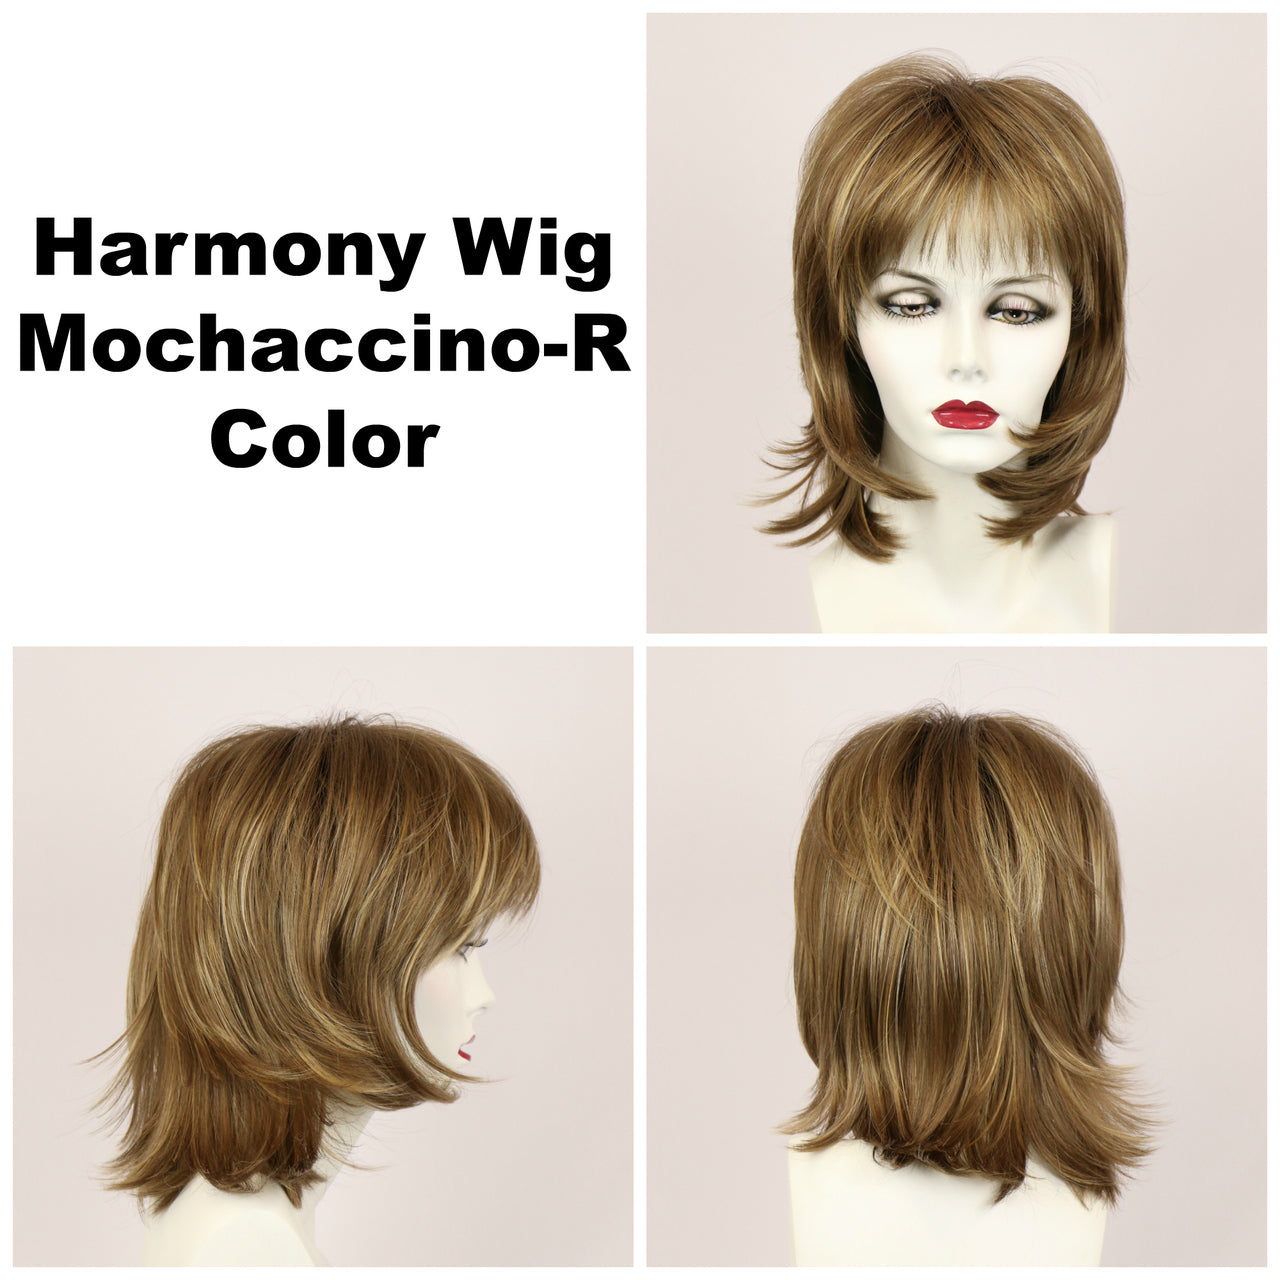 Mochaccino-R / Harmony w/ Roots / Medium Wig